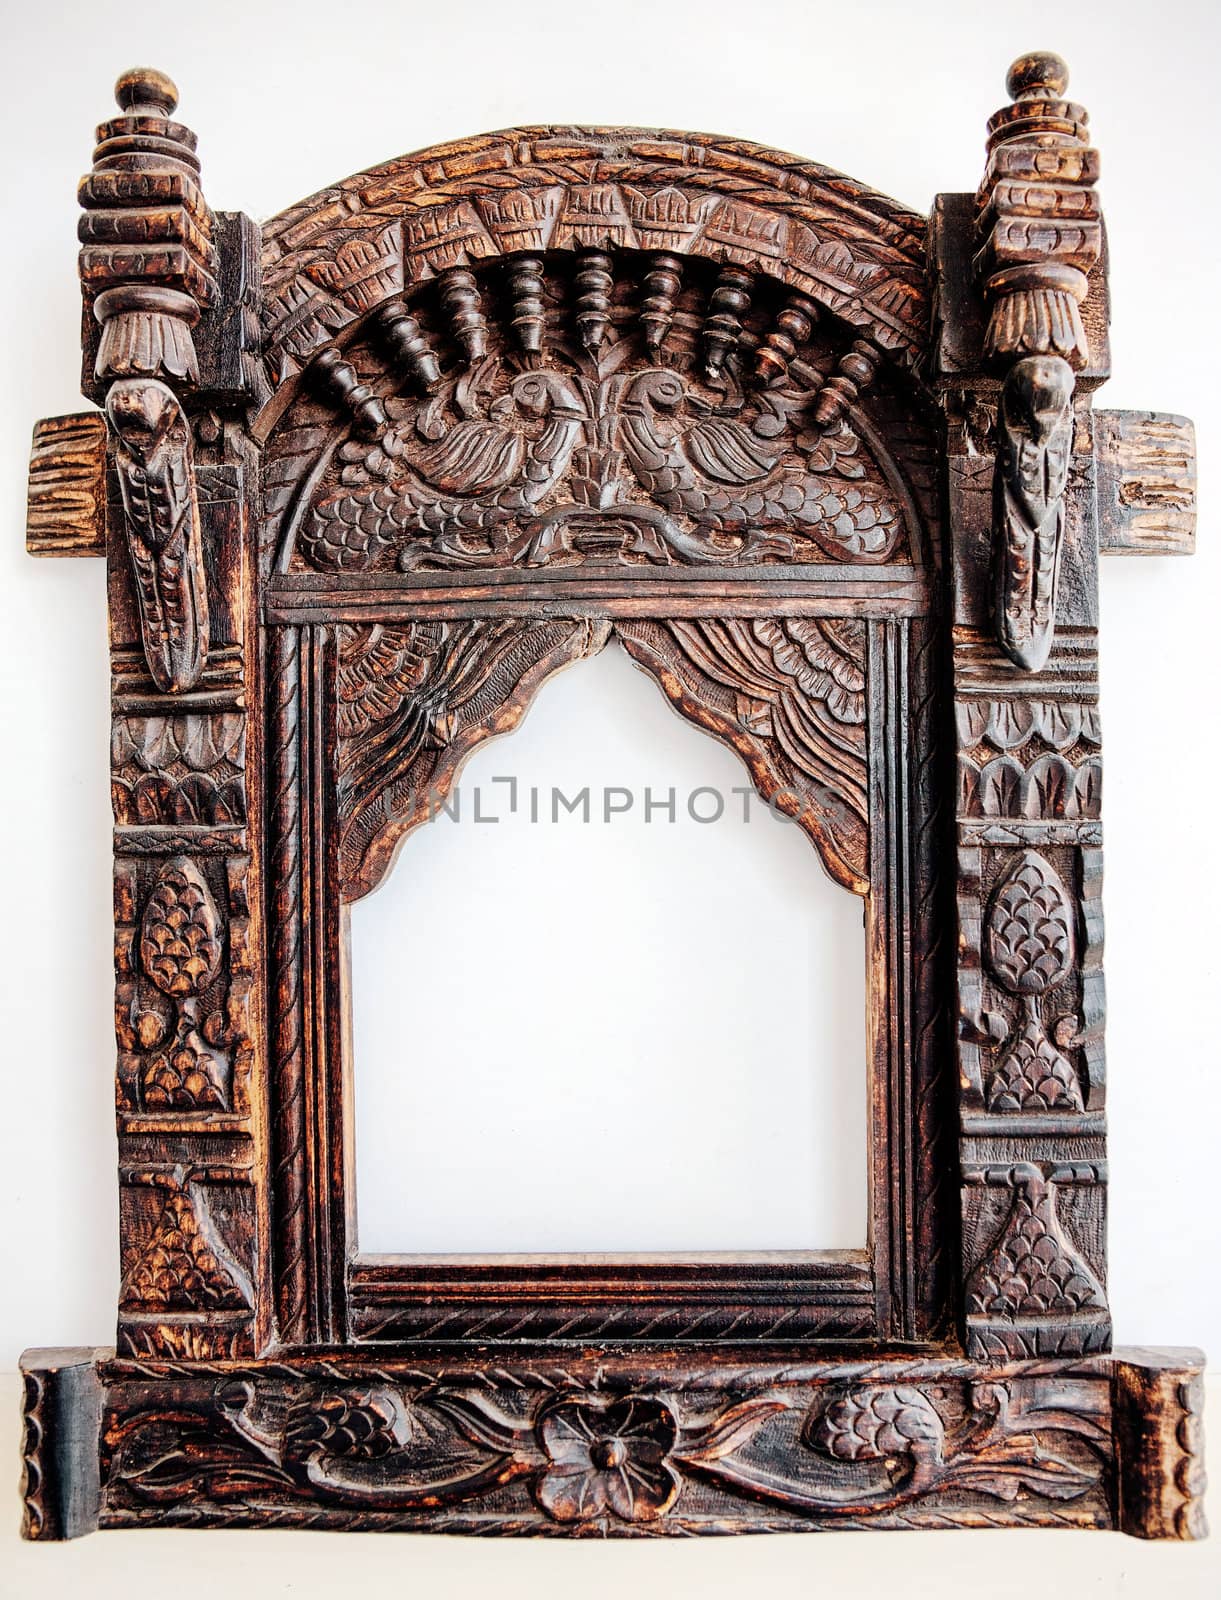 Old carved wooden frame. India. Background.